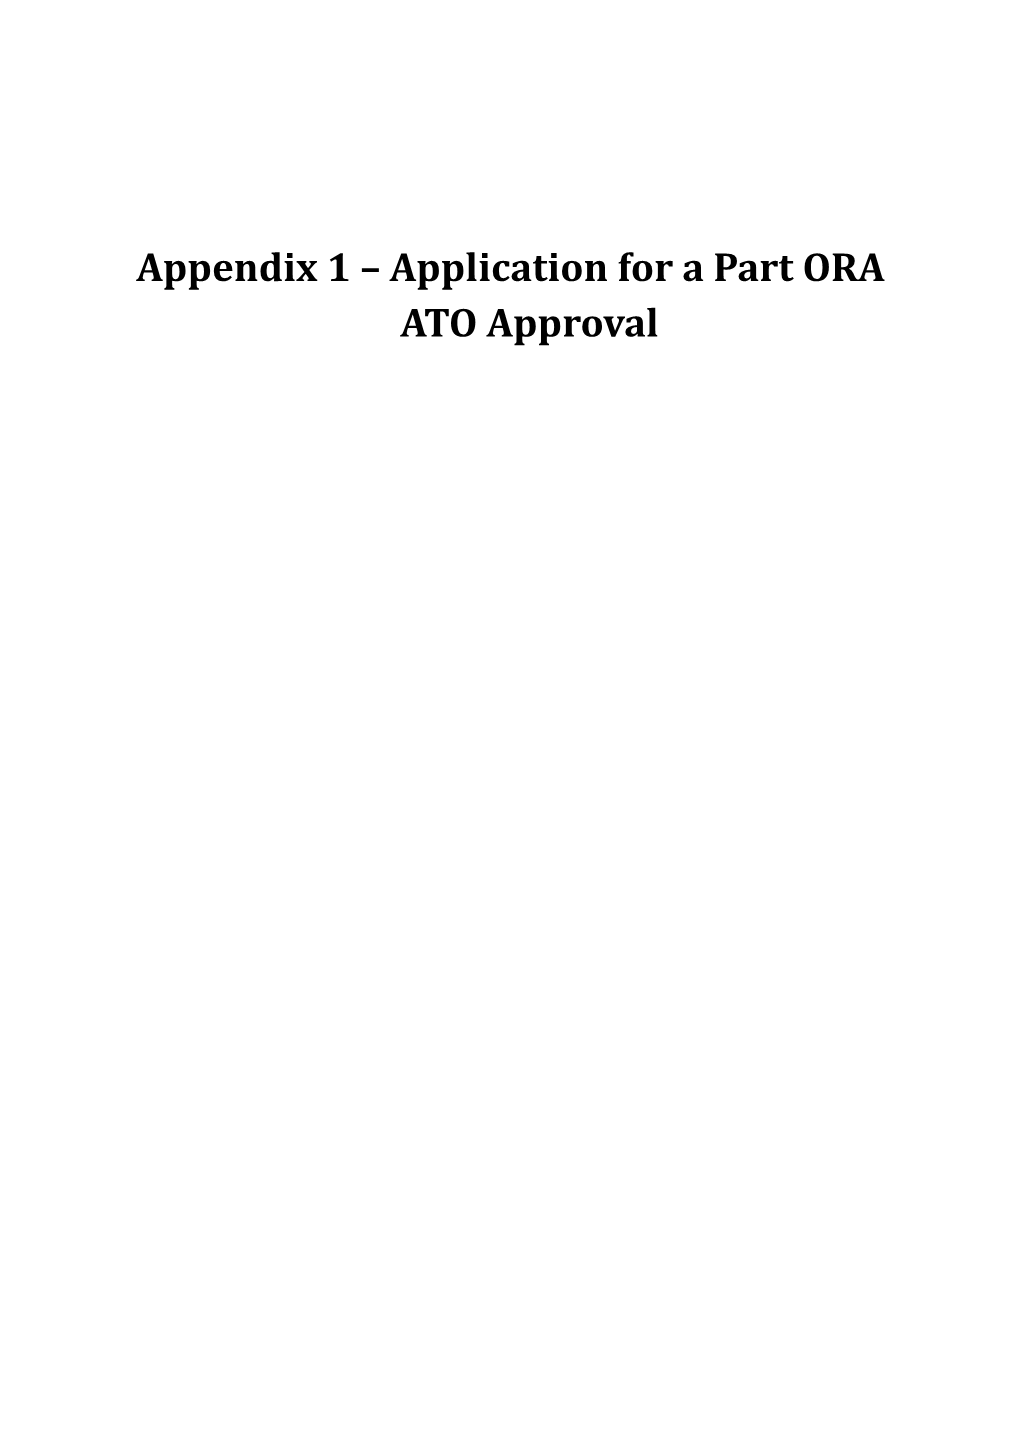 Appendix 1 Application for a Part ORA ATO Approval